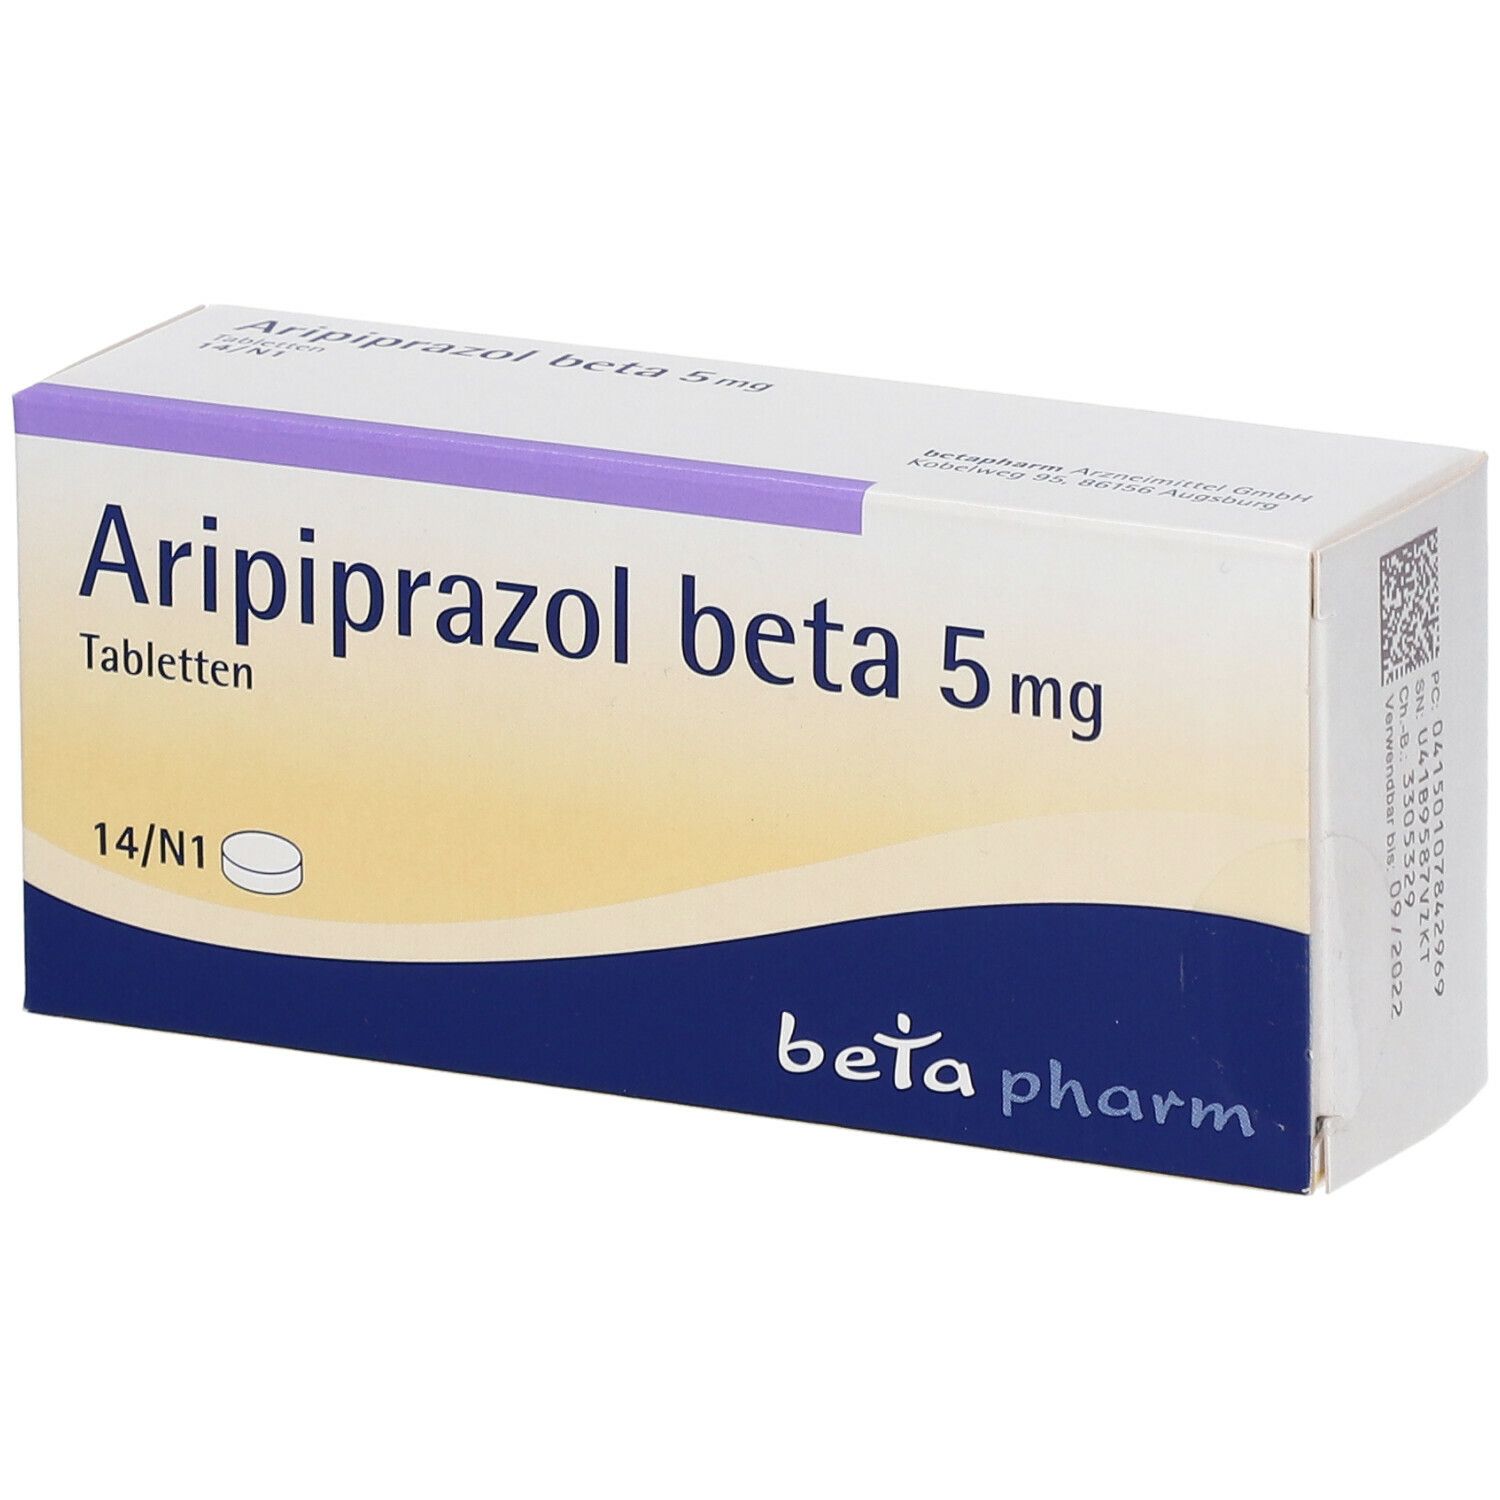 Aripiprazol beta 5 mg